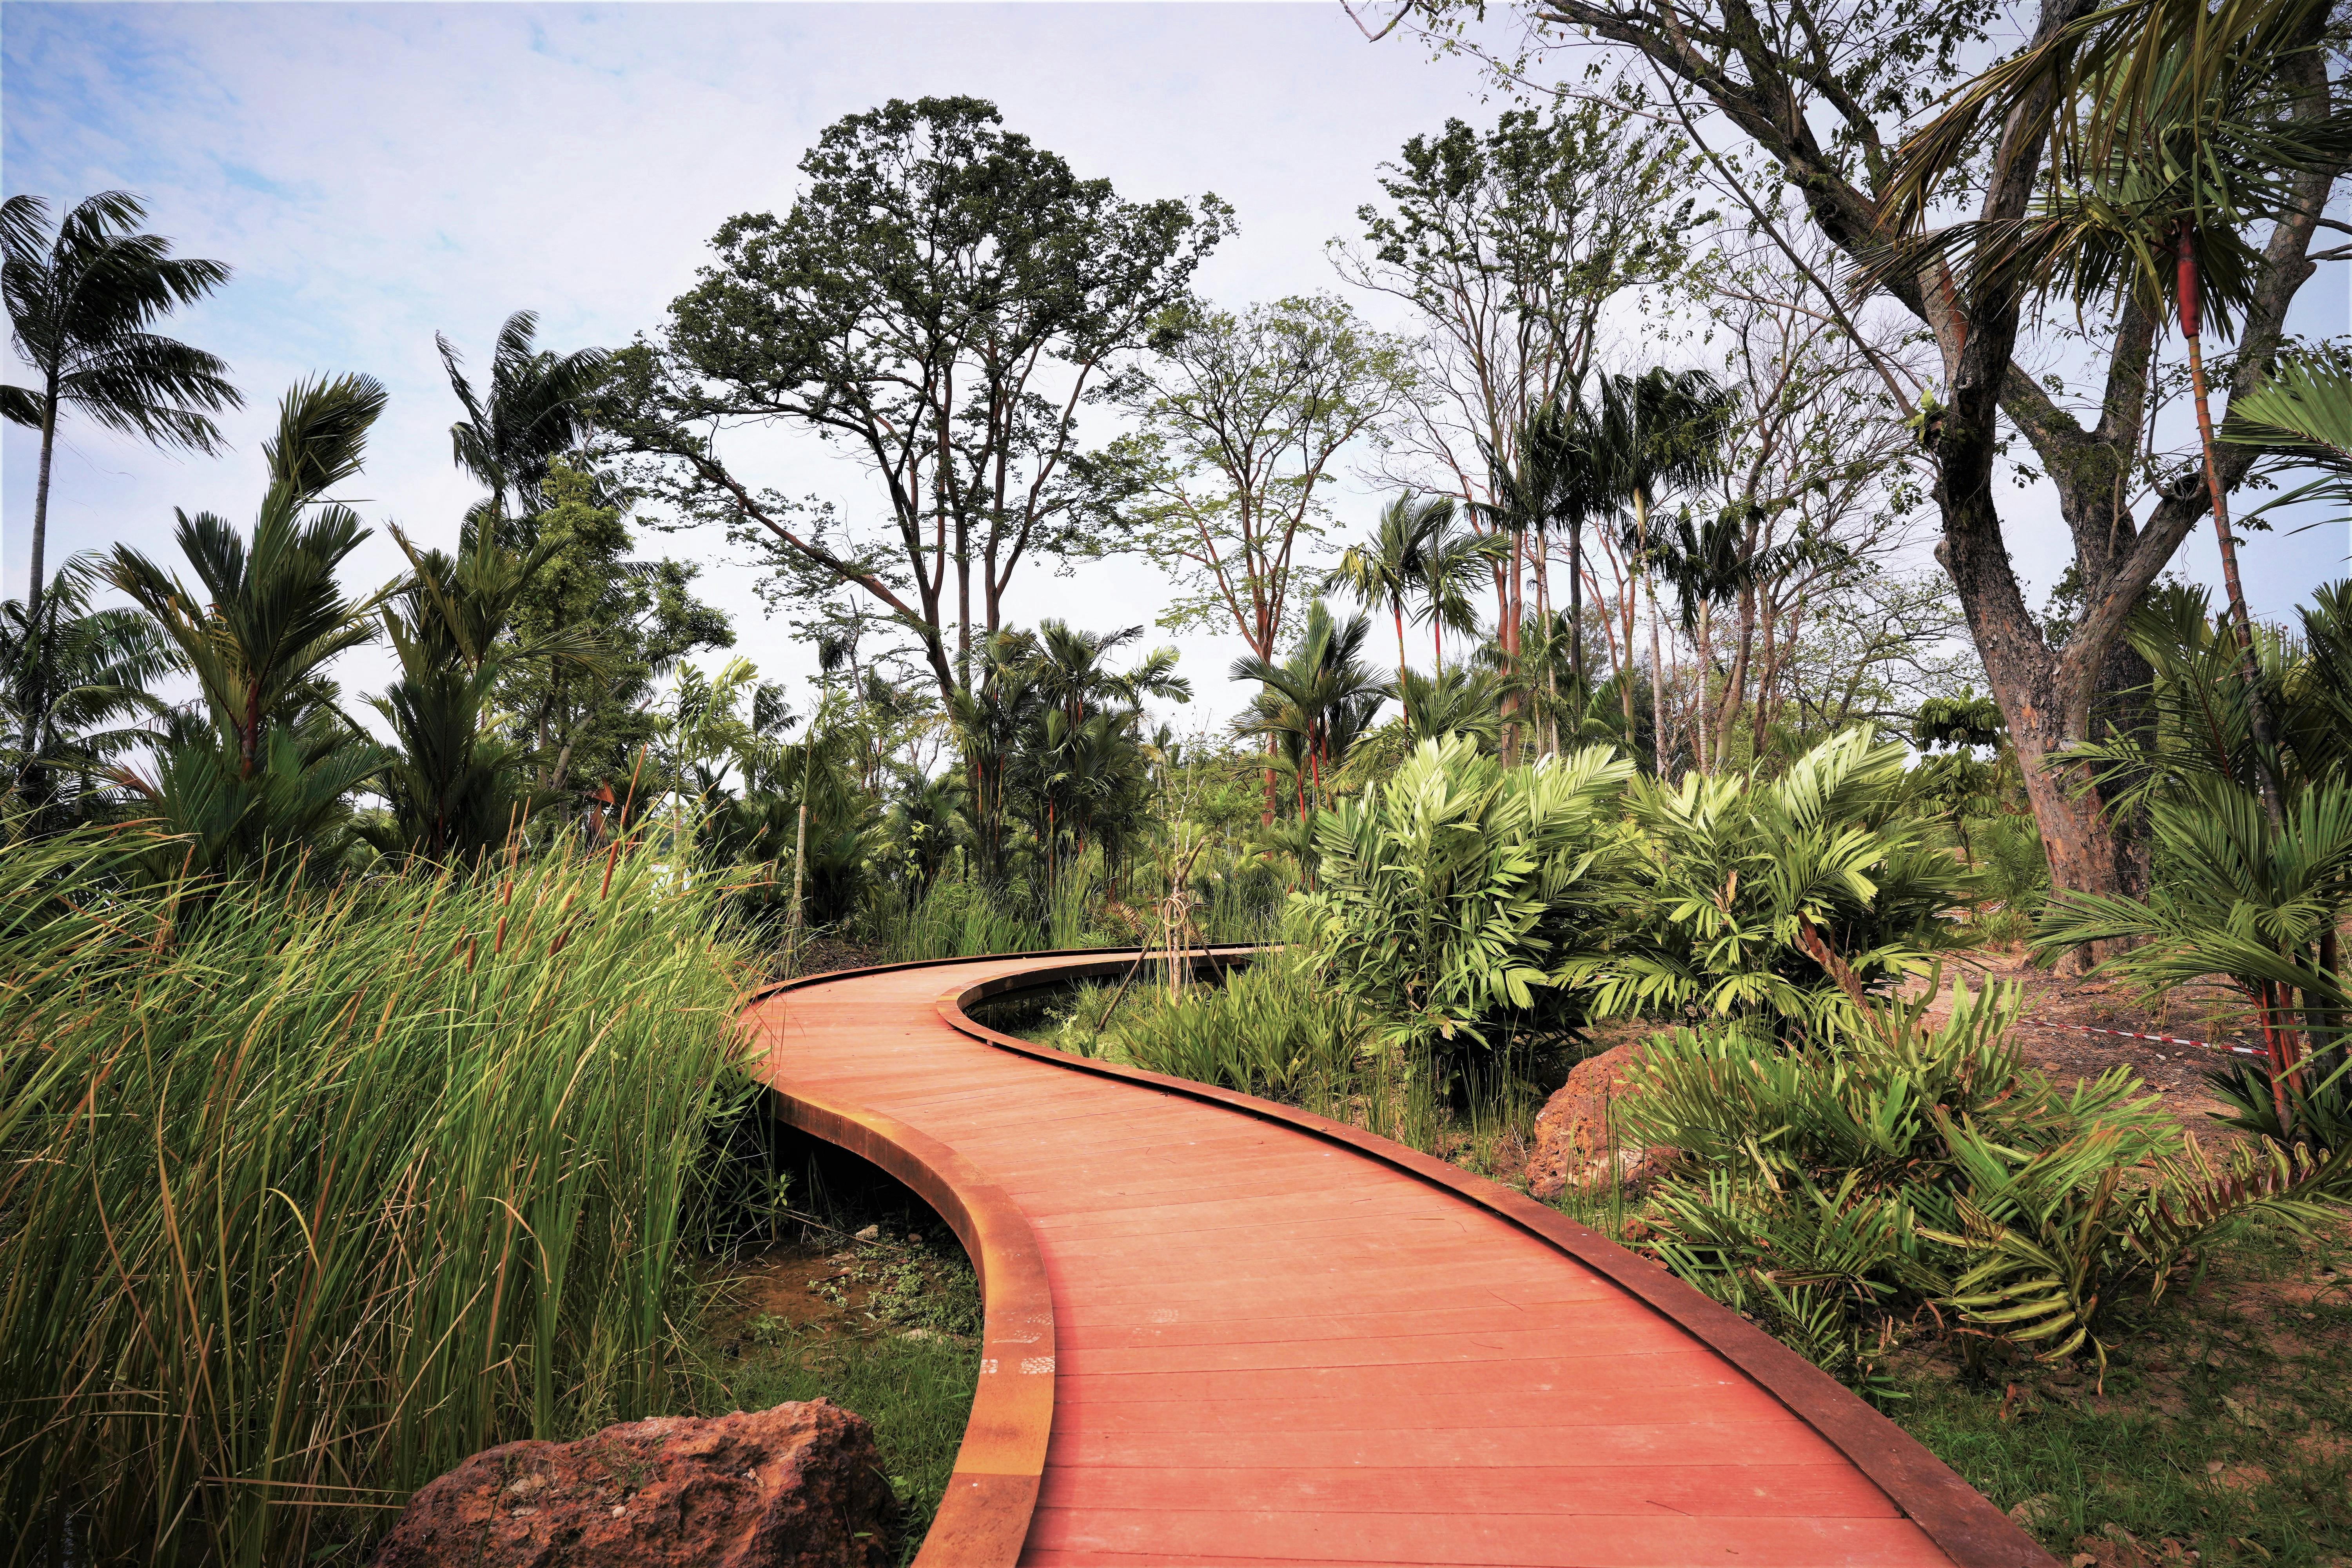 Rasau Walk. Source: National Parks Singapore